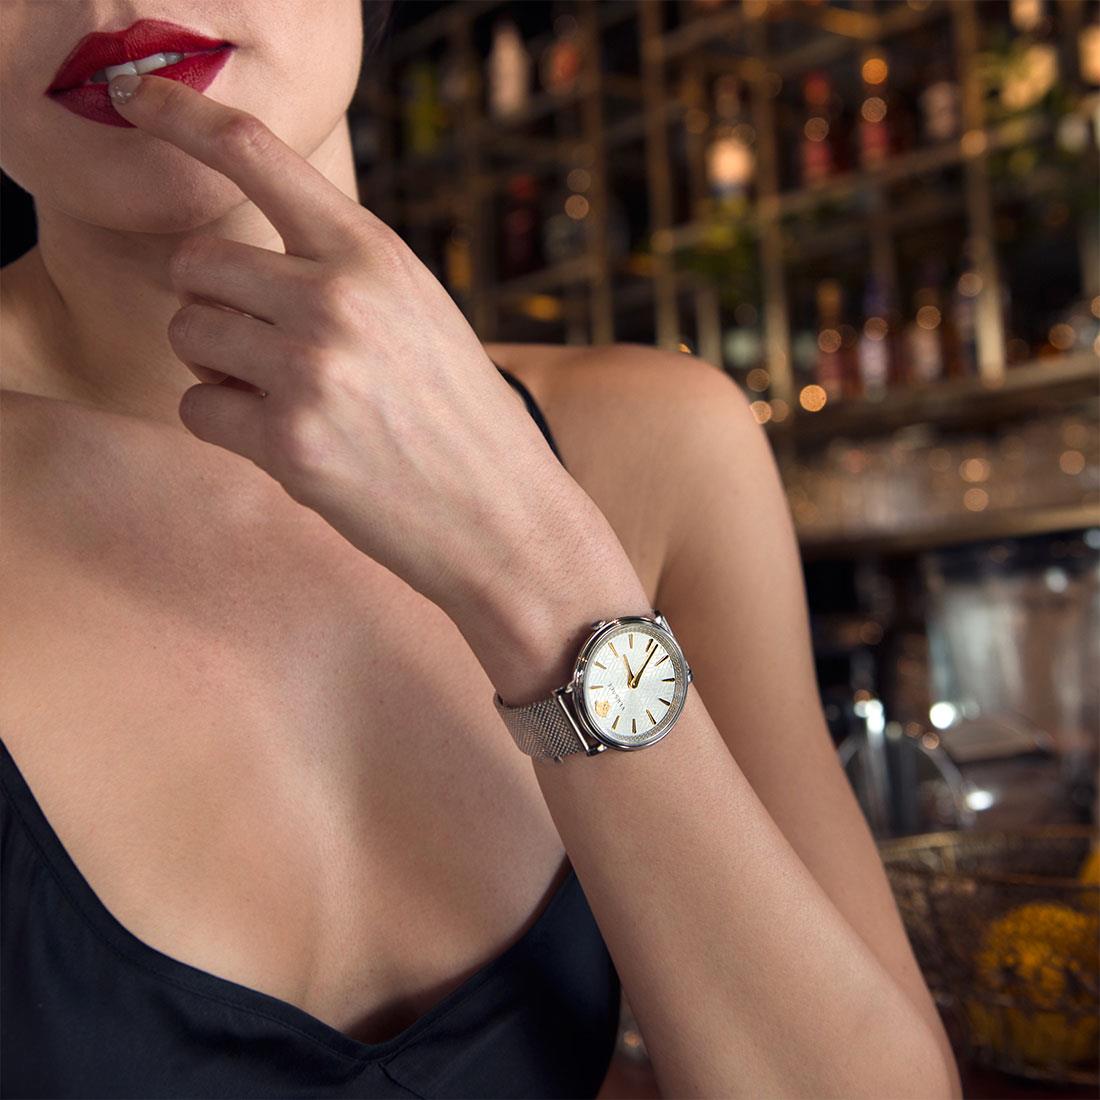 Versace VE8100519 V-Circle Silver Tone 38mm Ladies Watch